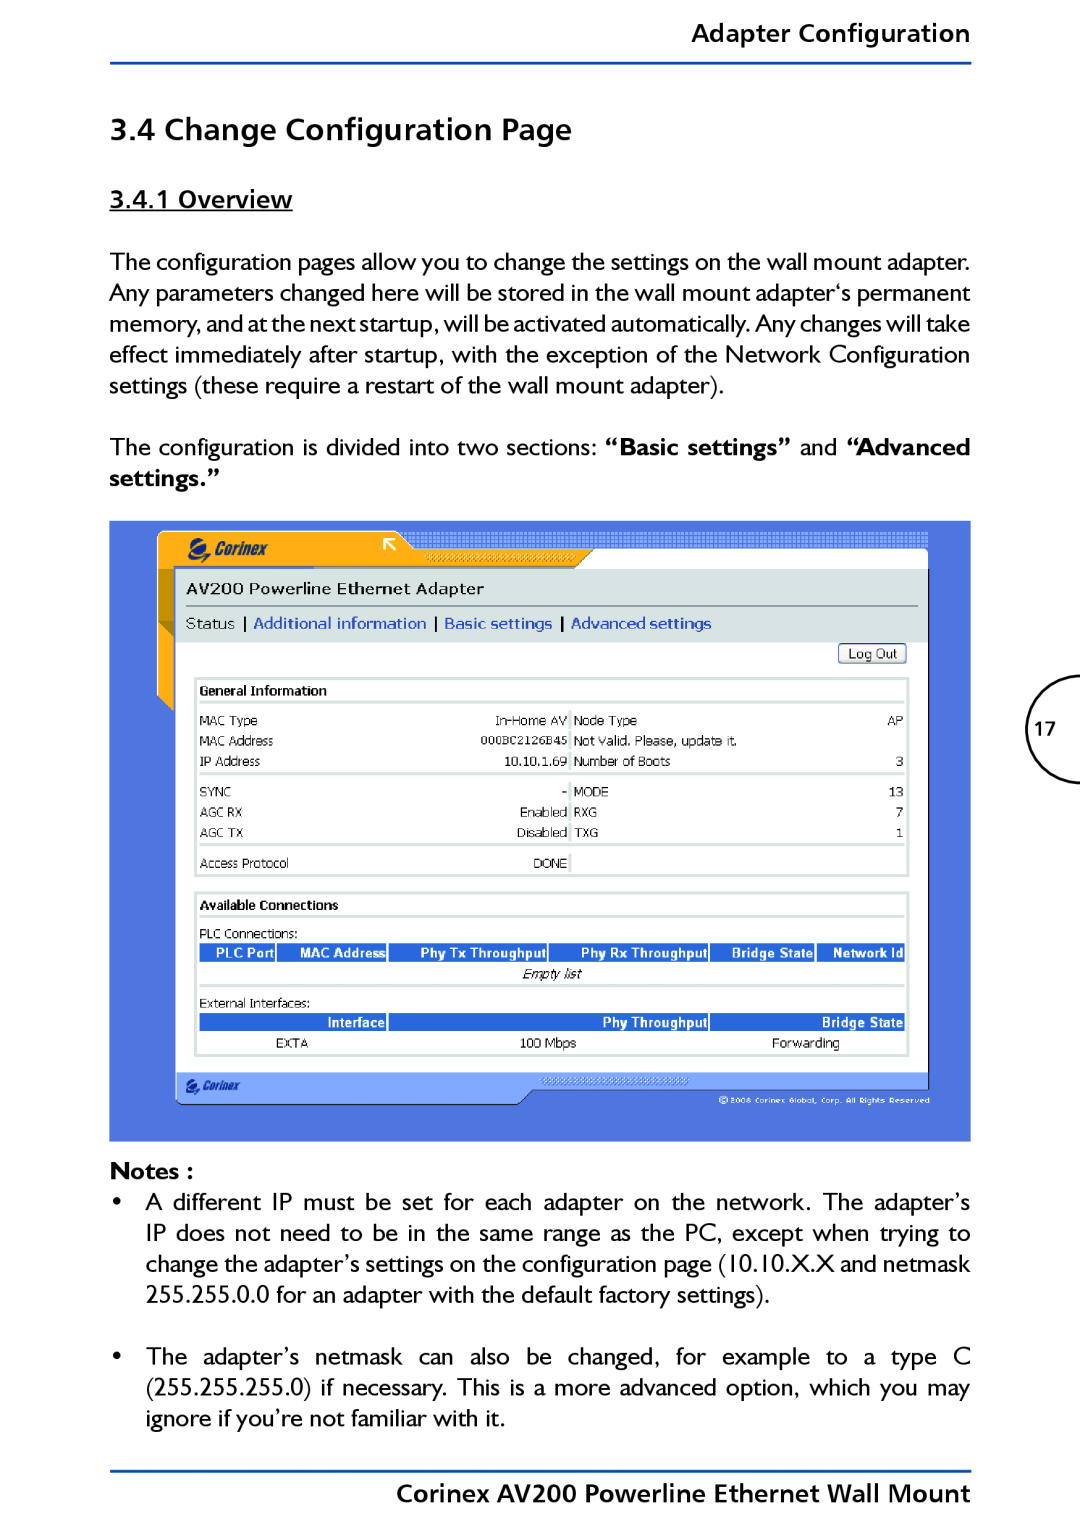 DeWalt manual Change Configuration Page, Overview, Adapter Configuration, Corinex AV200 Powerline Ethernet Wall Mount 